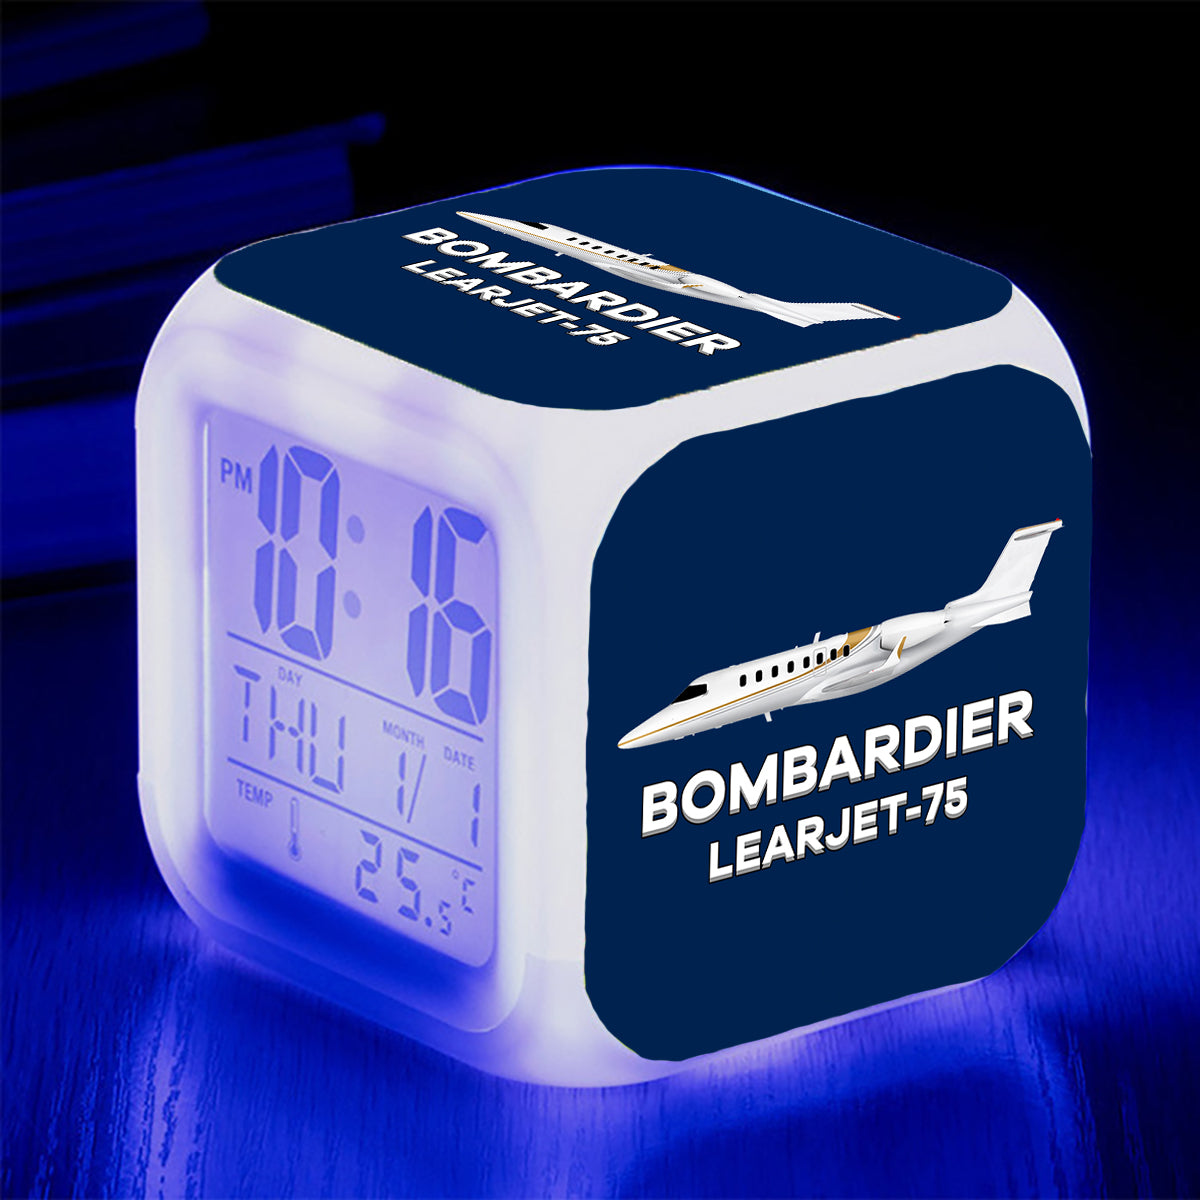 The Bombardier Learjet 75 Designed "7 Colour" Digital Alarm Clock